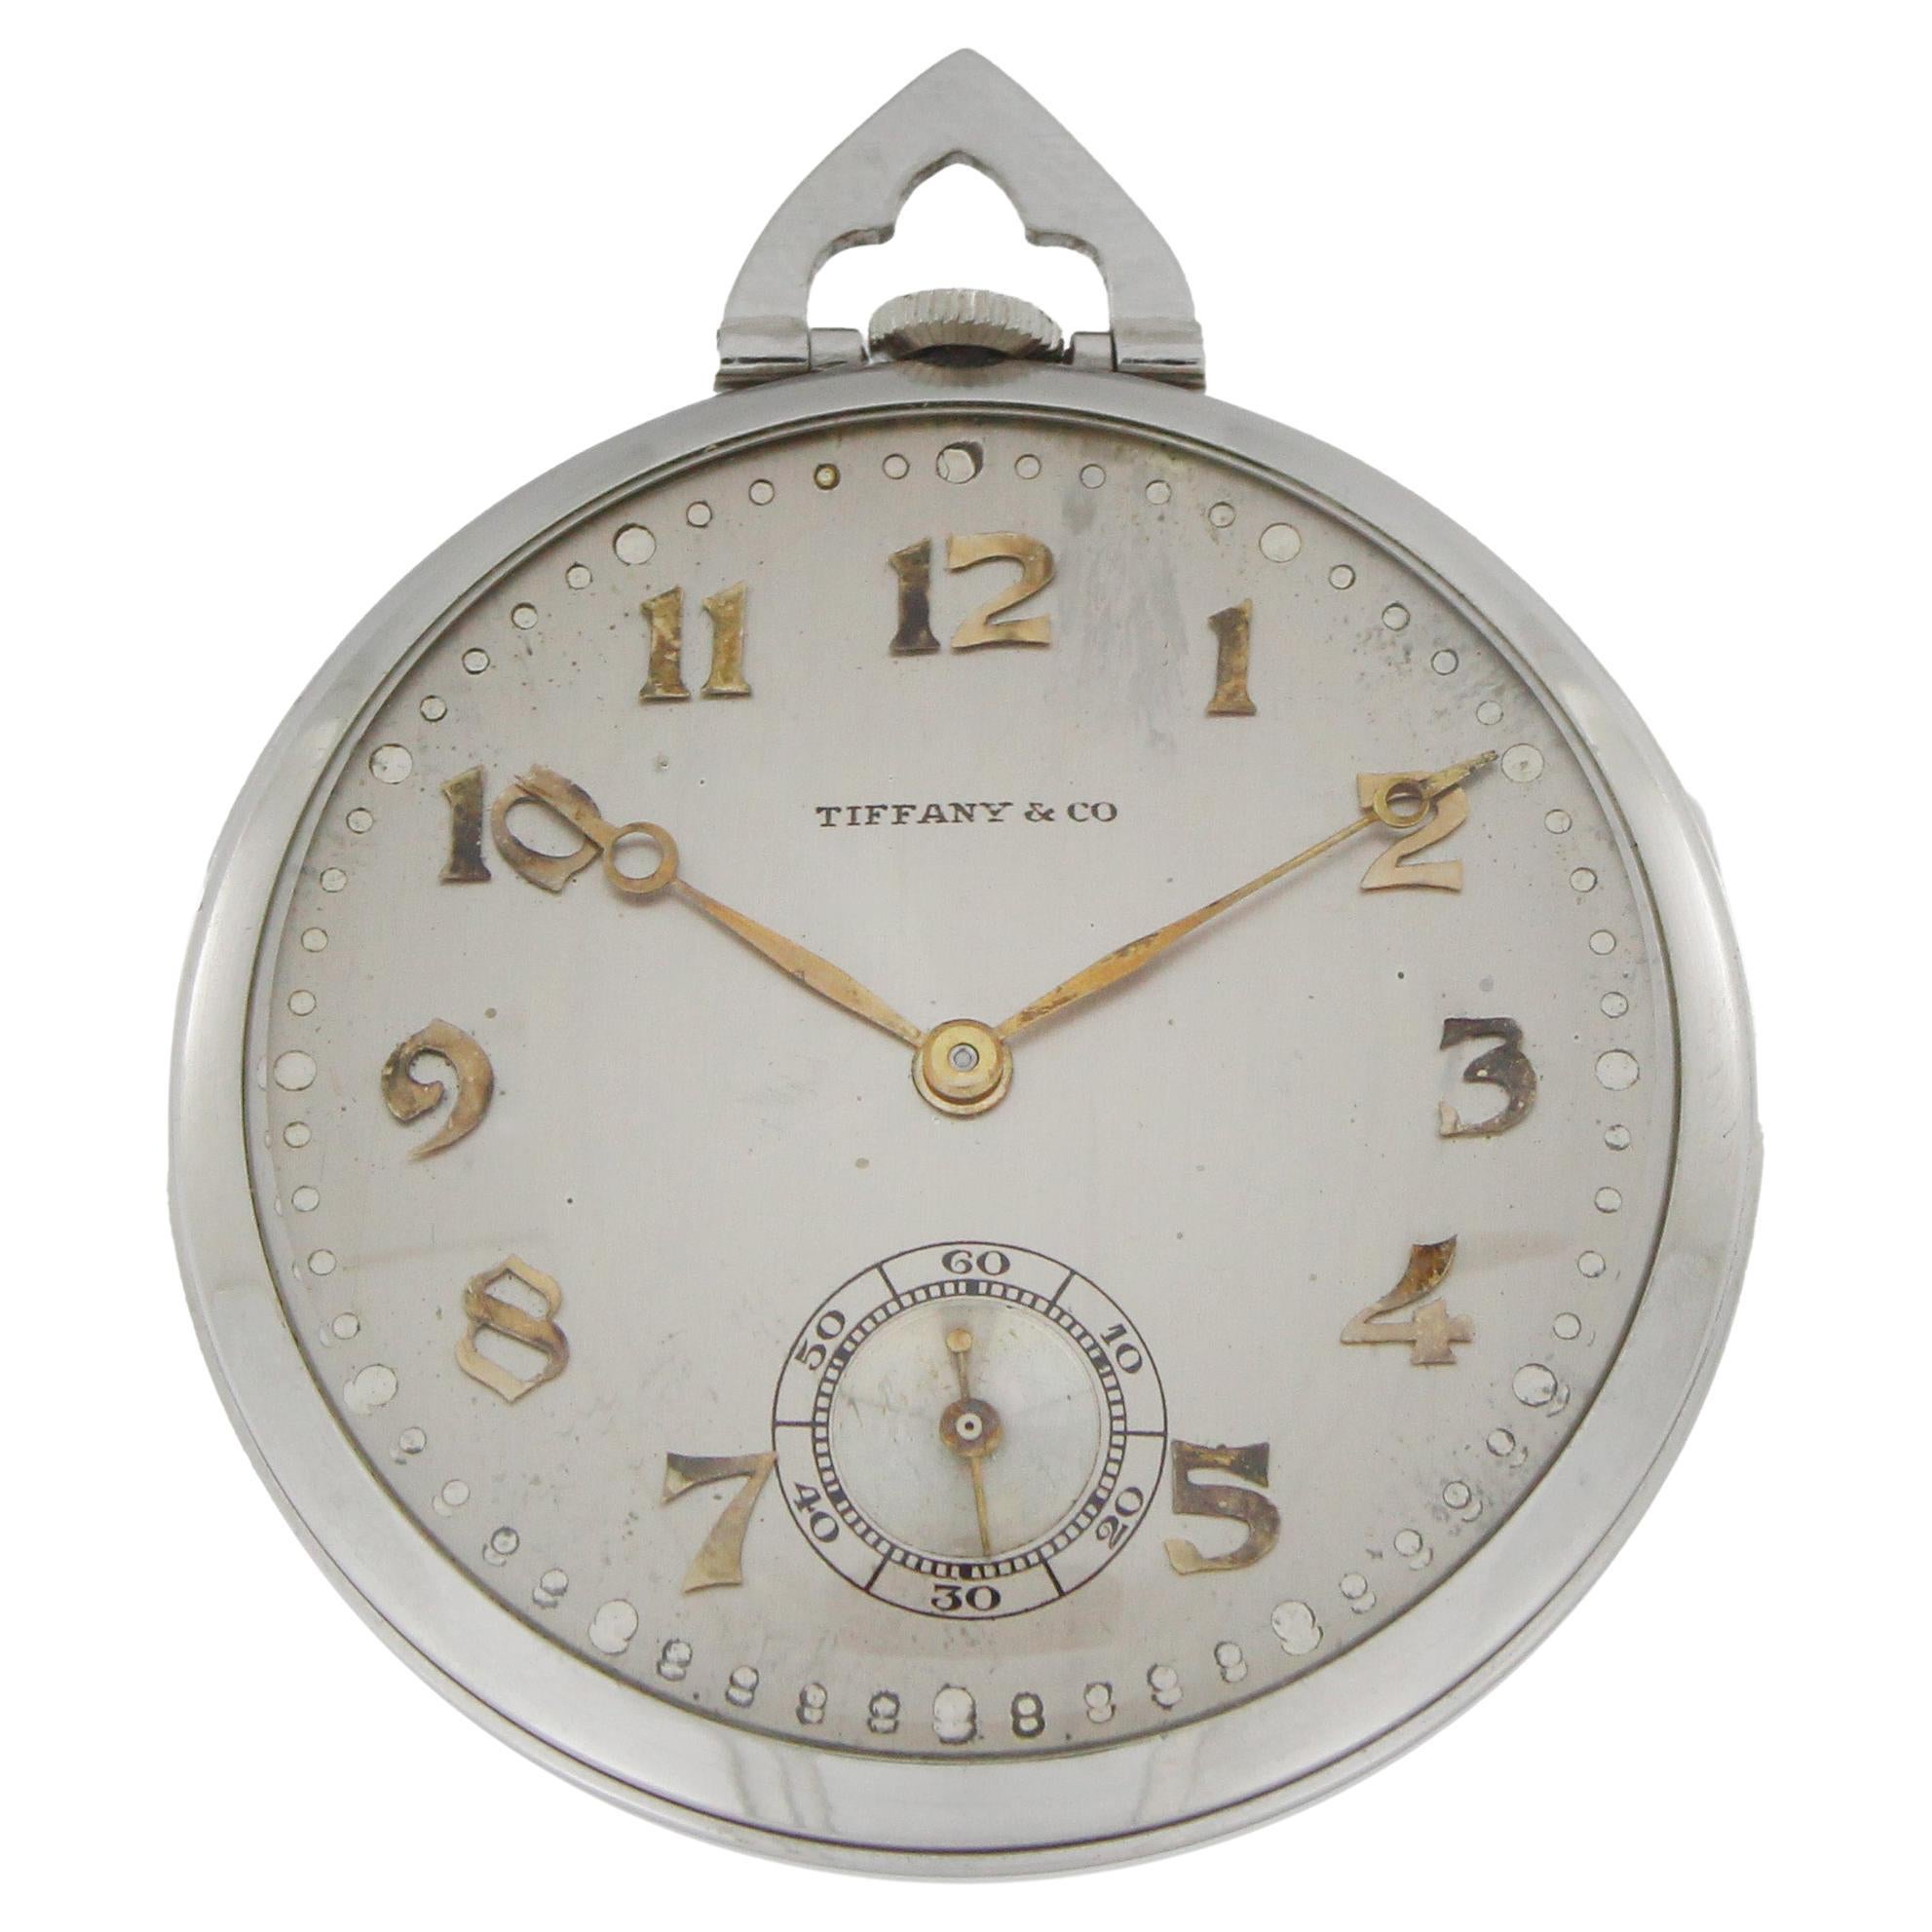 1930s Tiffany & Co. Pocketwatch in Platinum